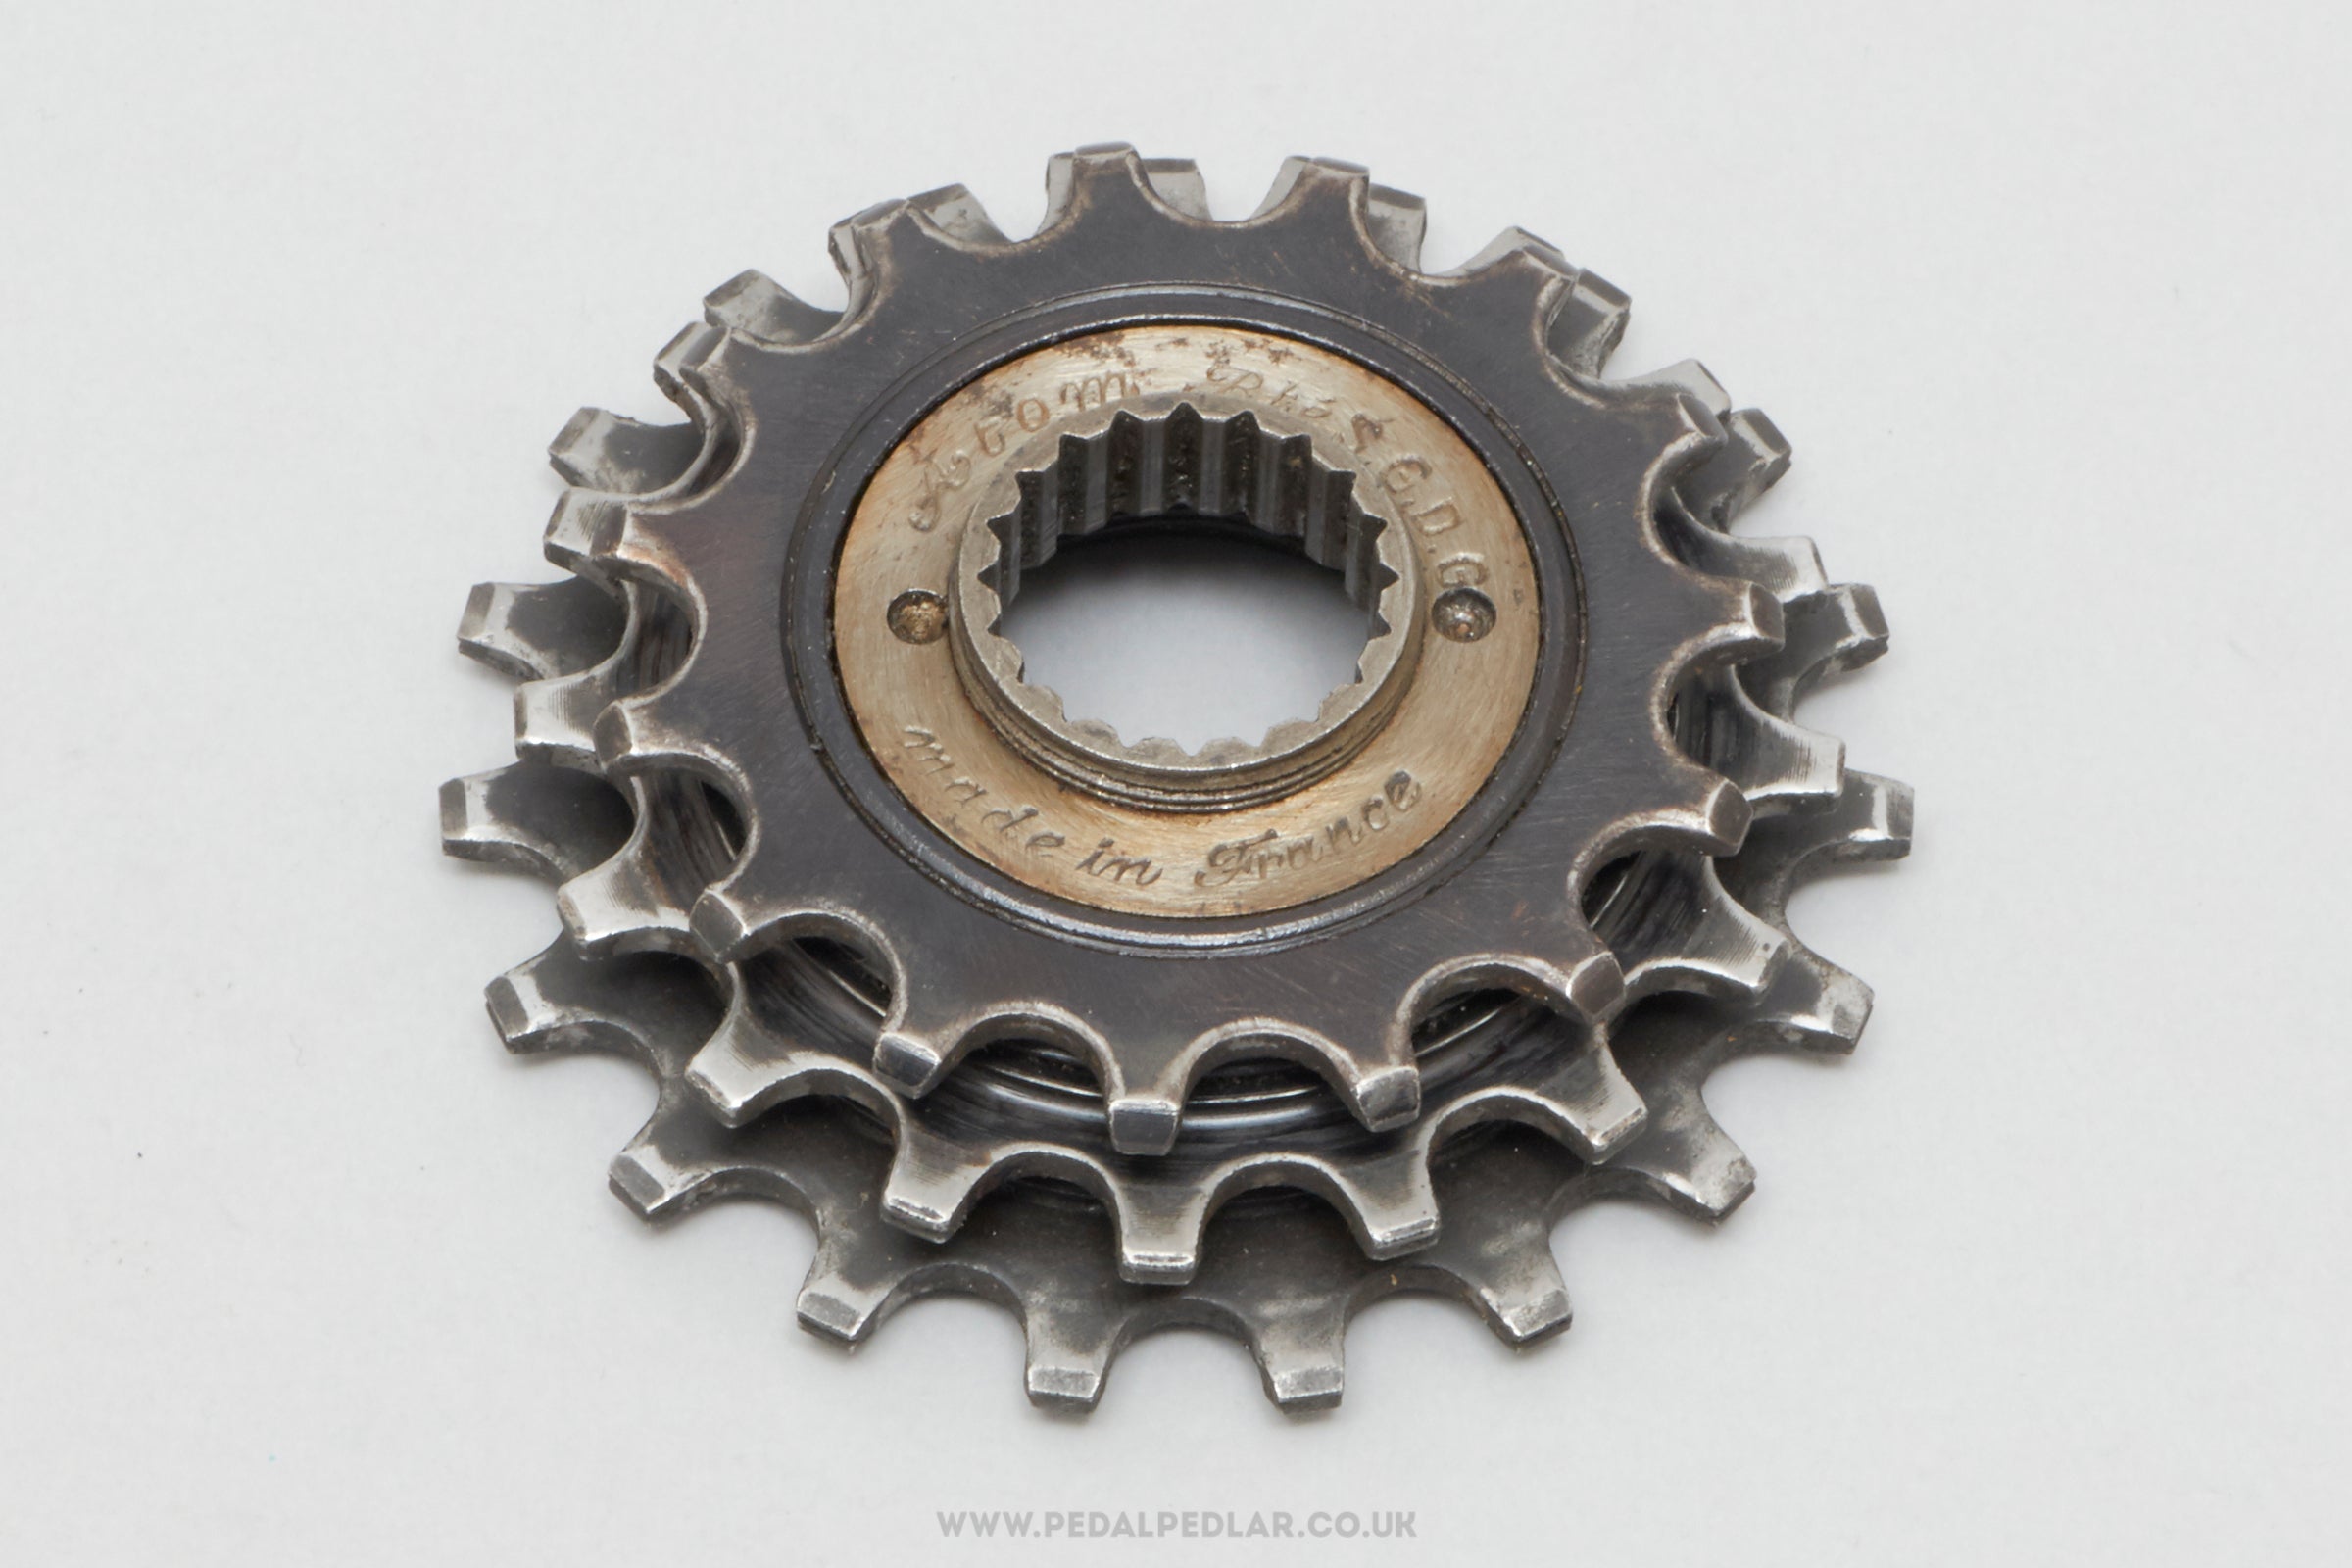 Atom Vintage 3 Speed 15-19 Freewheel - Pedal Pedlar - Bike Parts For Sale